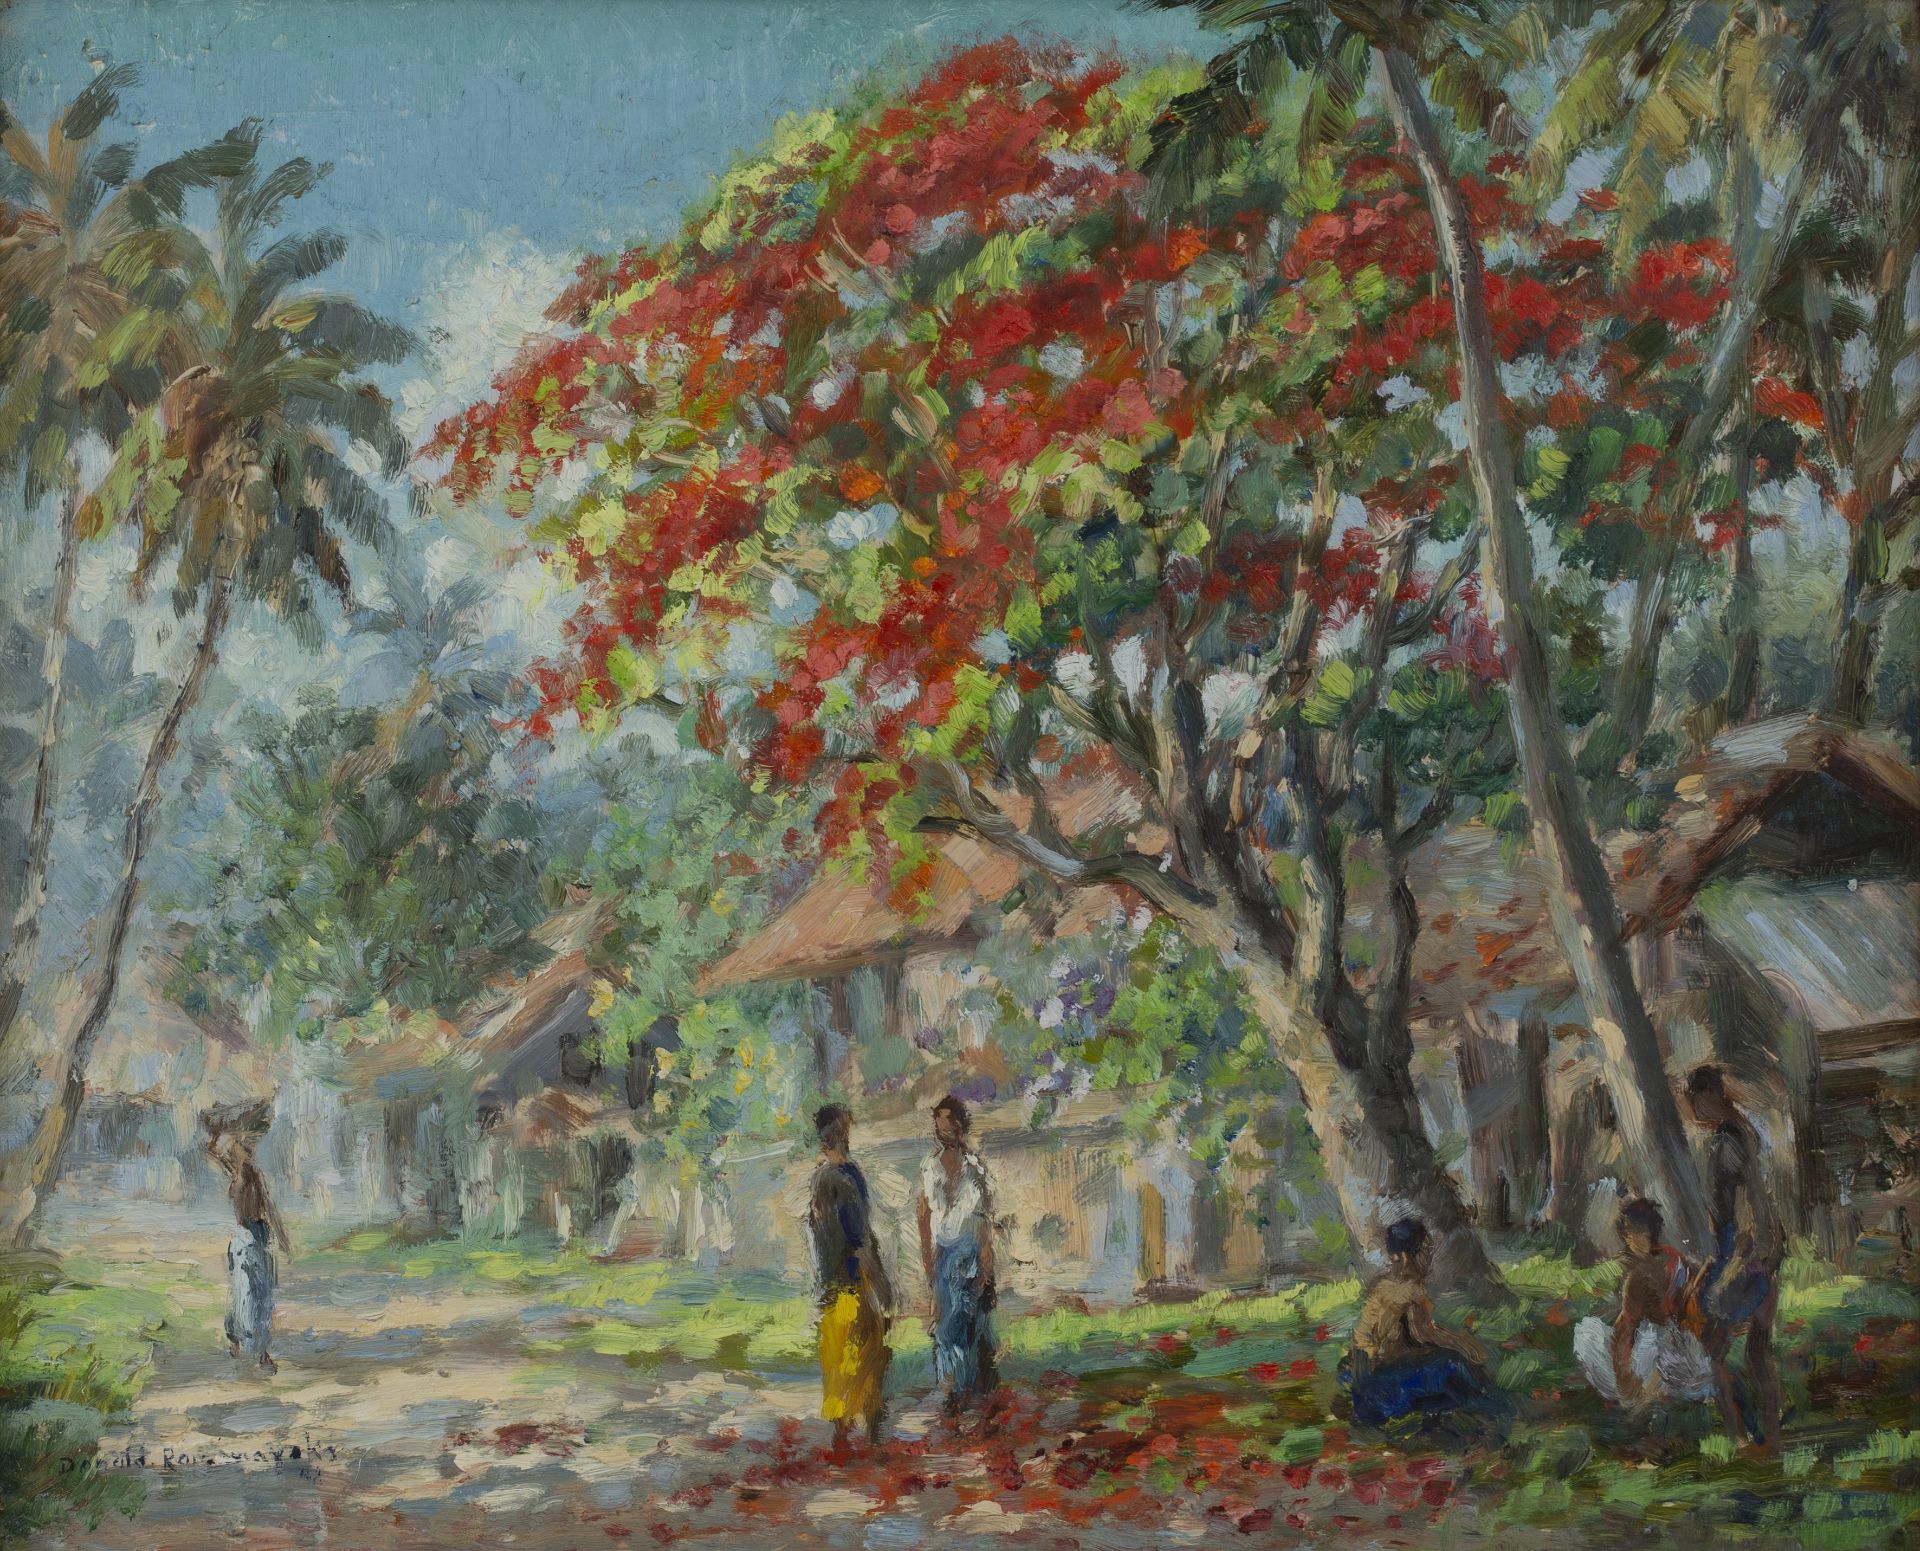 Donald Ramanayake (1920-1993) 'Sri Lankan village scene', oil on panel, signed and dated 1948